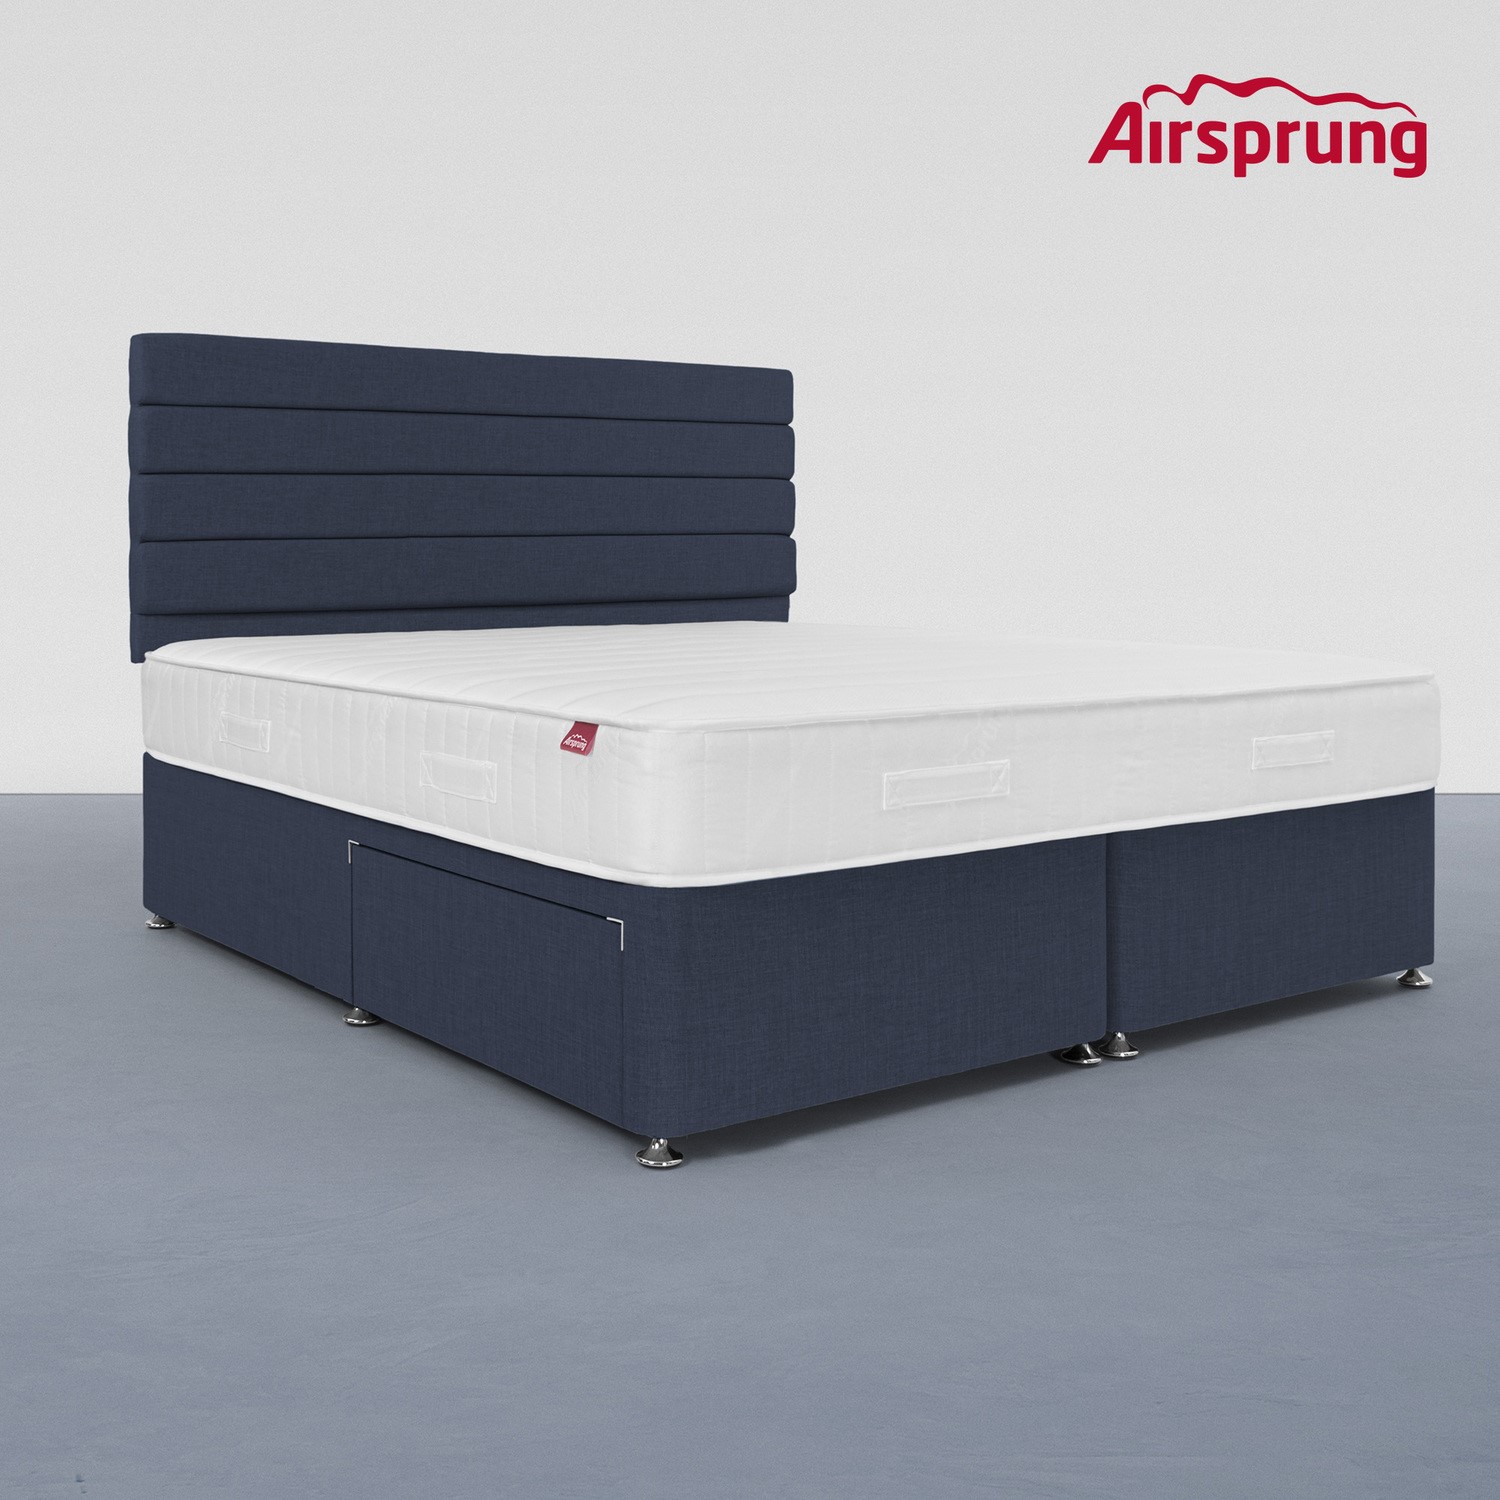 Photo of Airsprung super king 2 drawer divan bed with comfort mattress - midnight blue